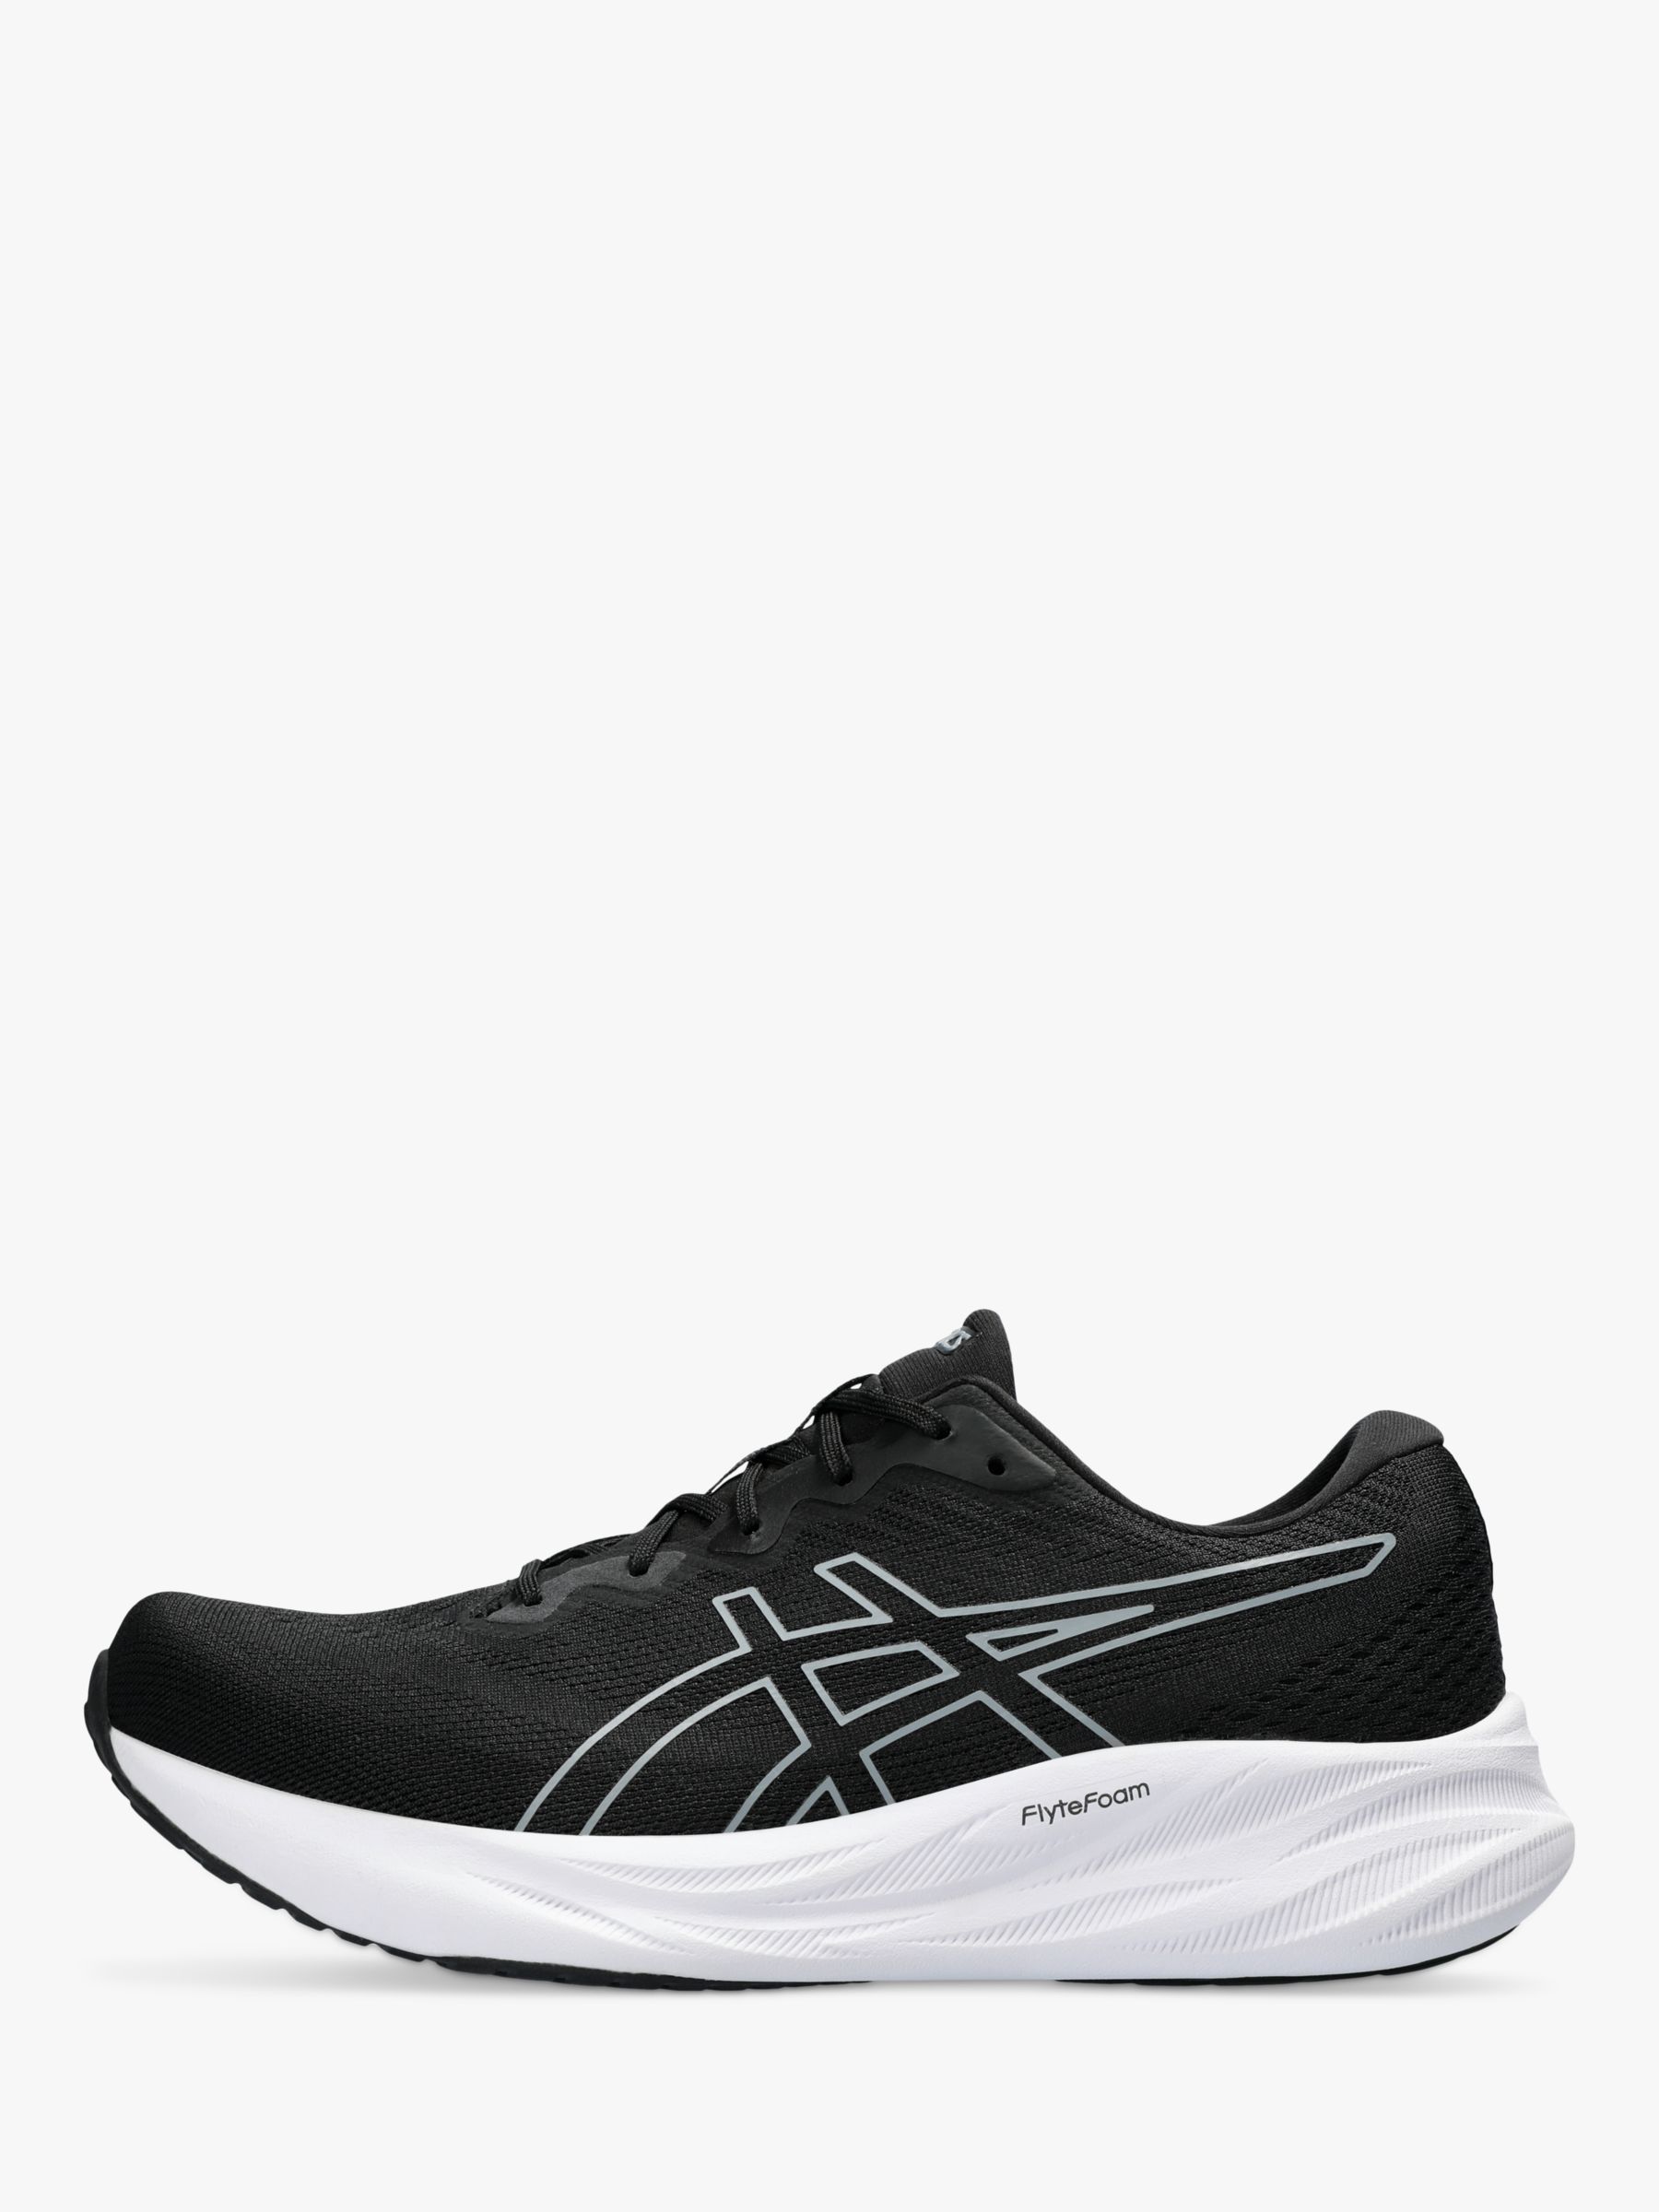 ASICS GEL-PULSE 15 Men's Running Shoes, Black/Sheet Rock, 7